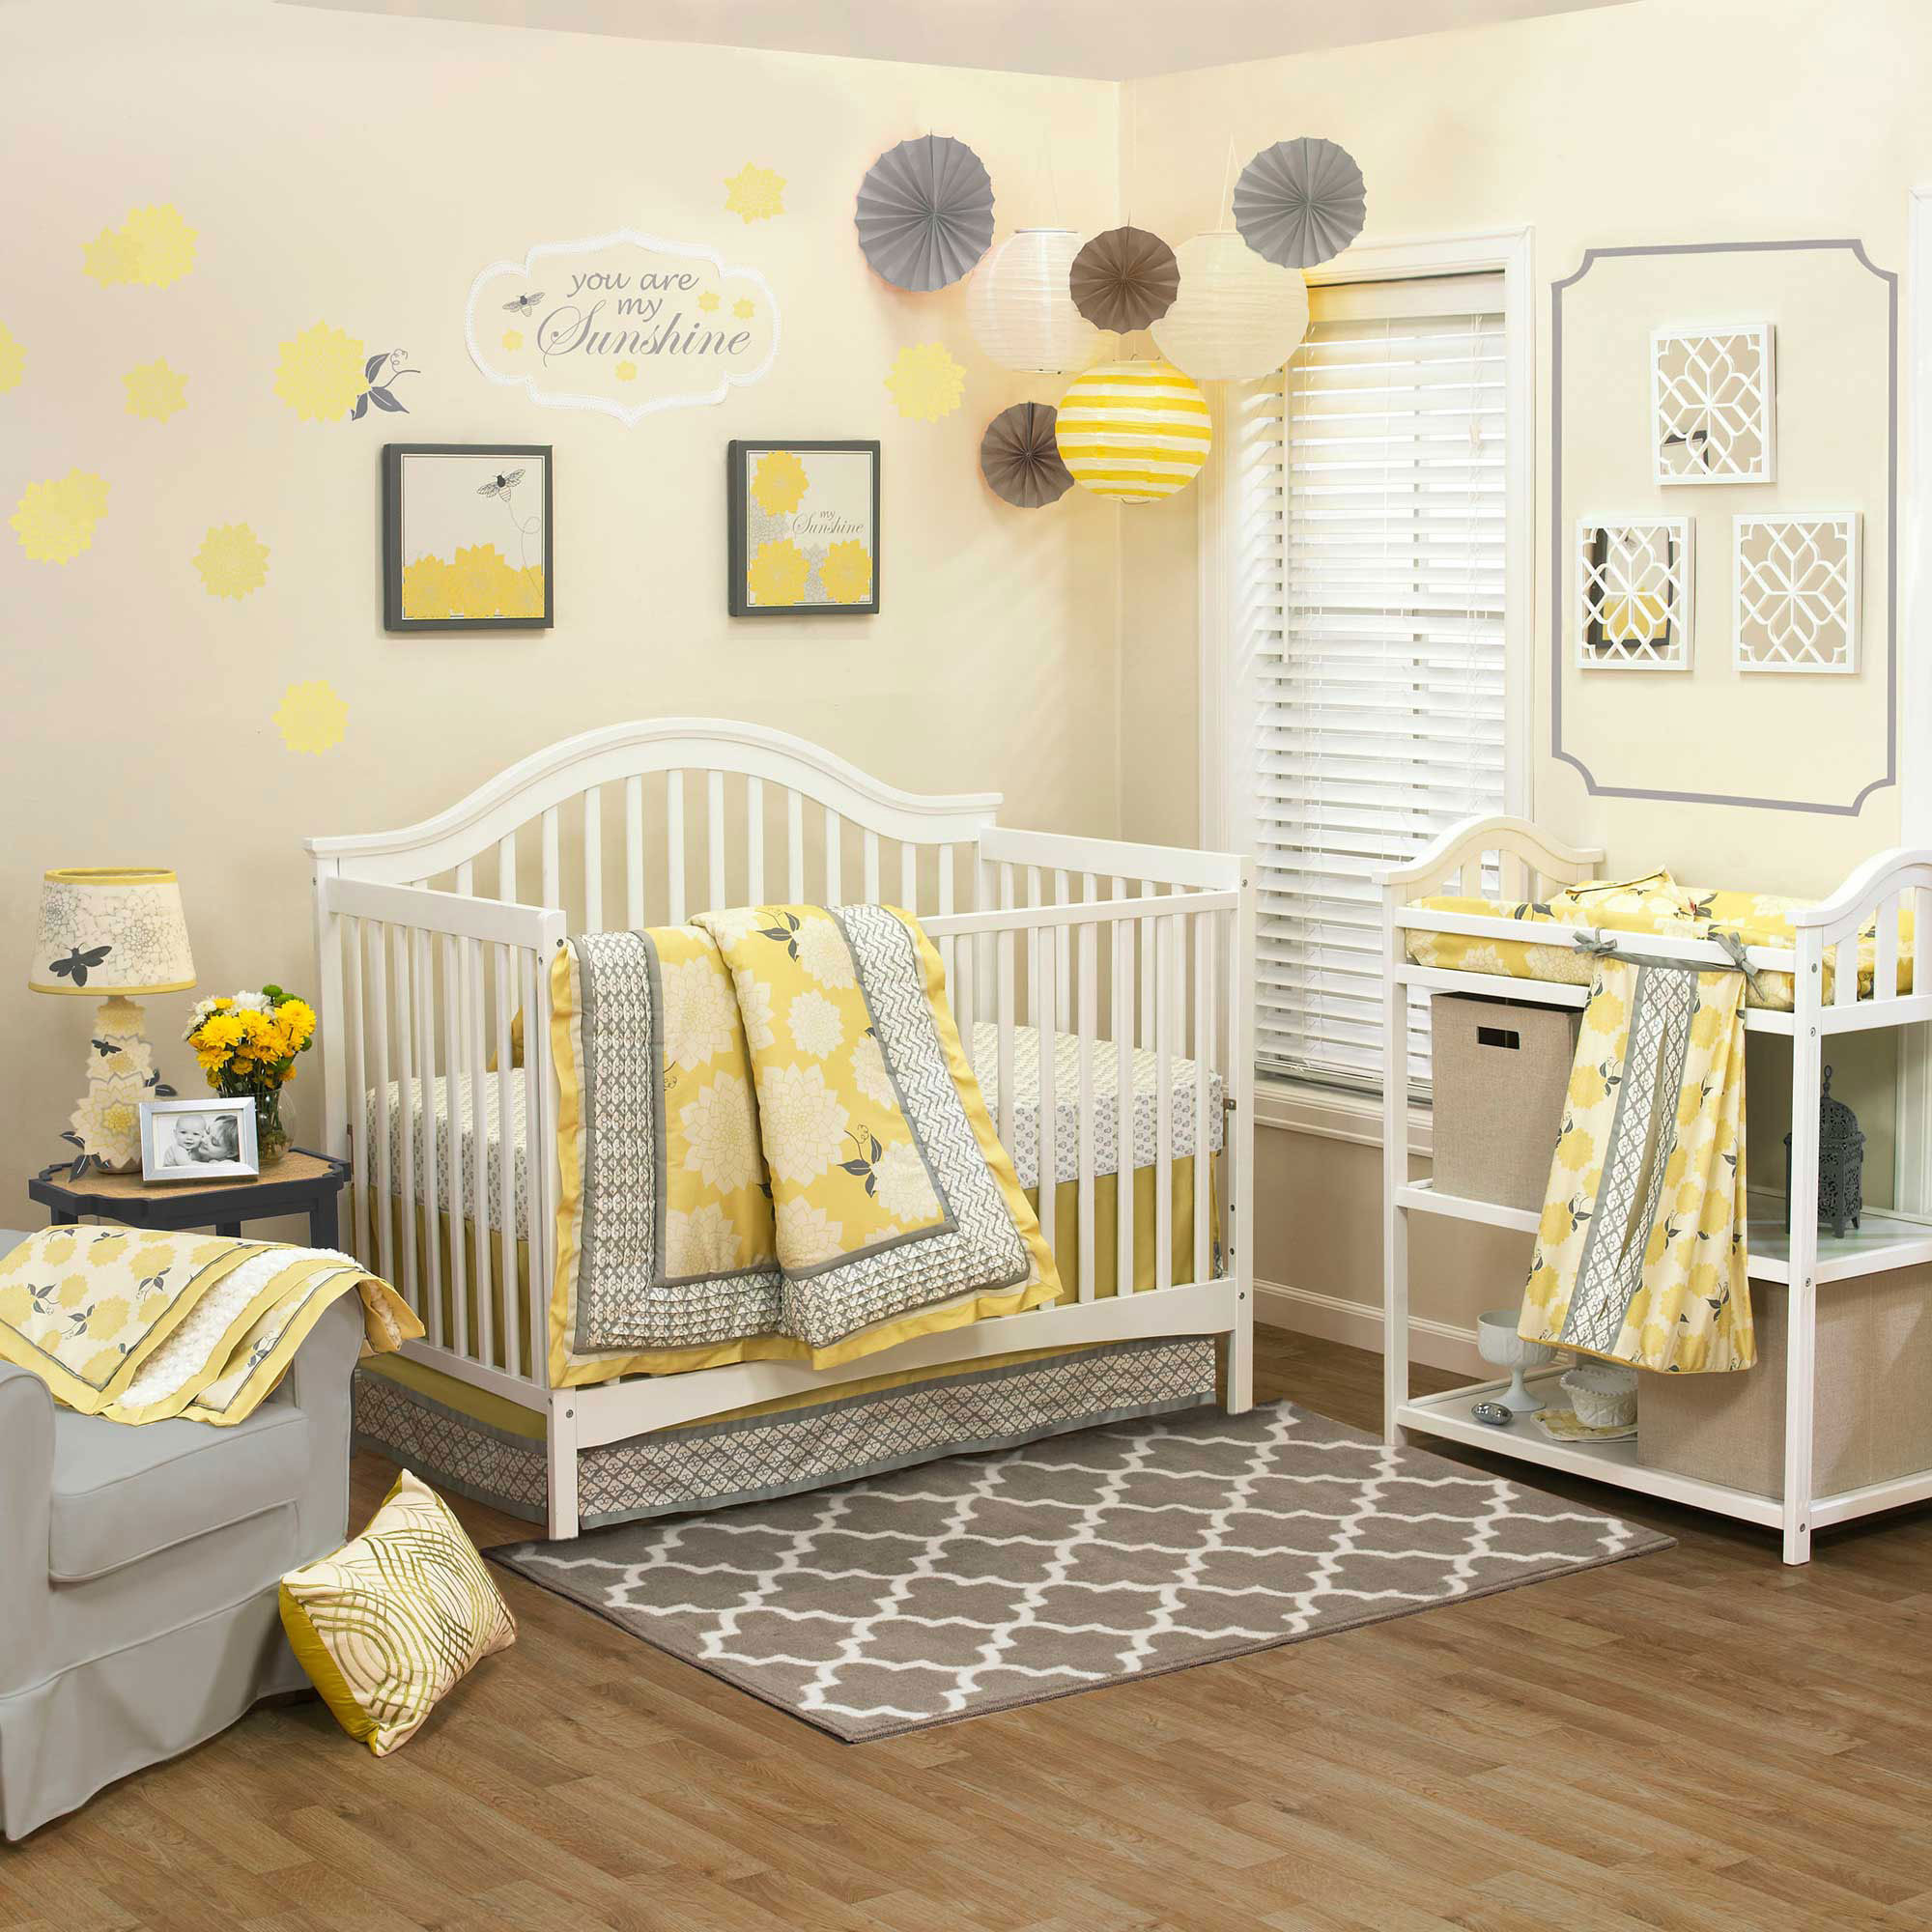 Baby Room Decoration Ideas
 Baby Girl Nursery Ideas 10 Pretty Examples Decorating Room